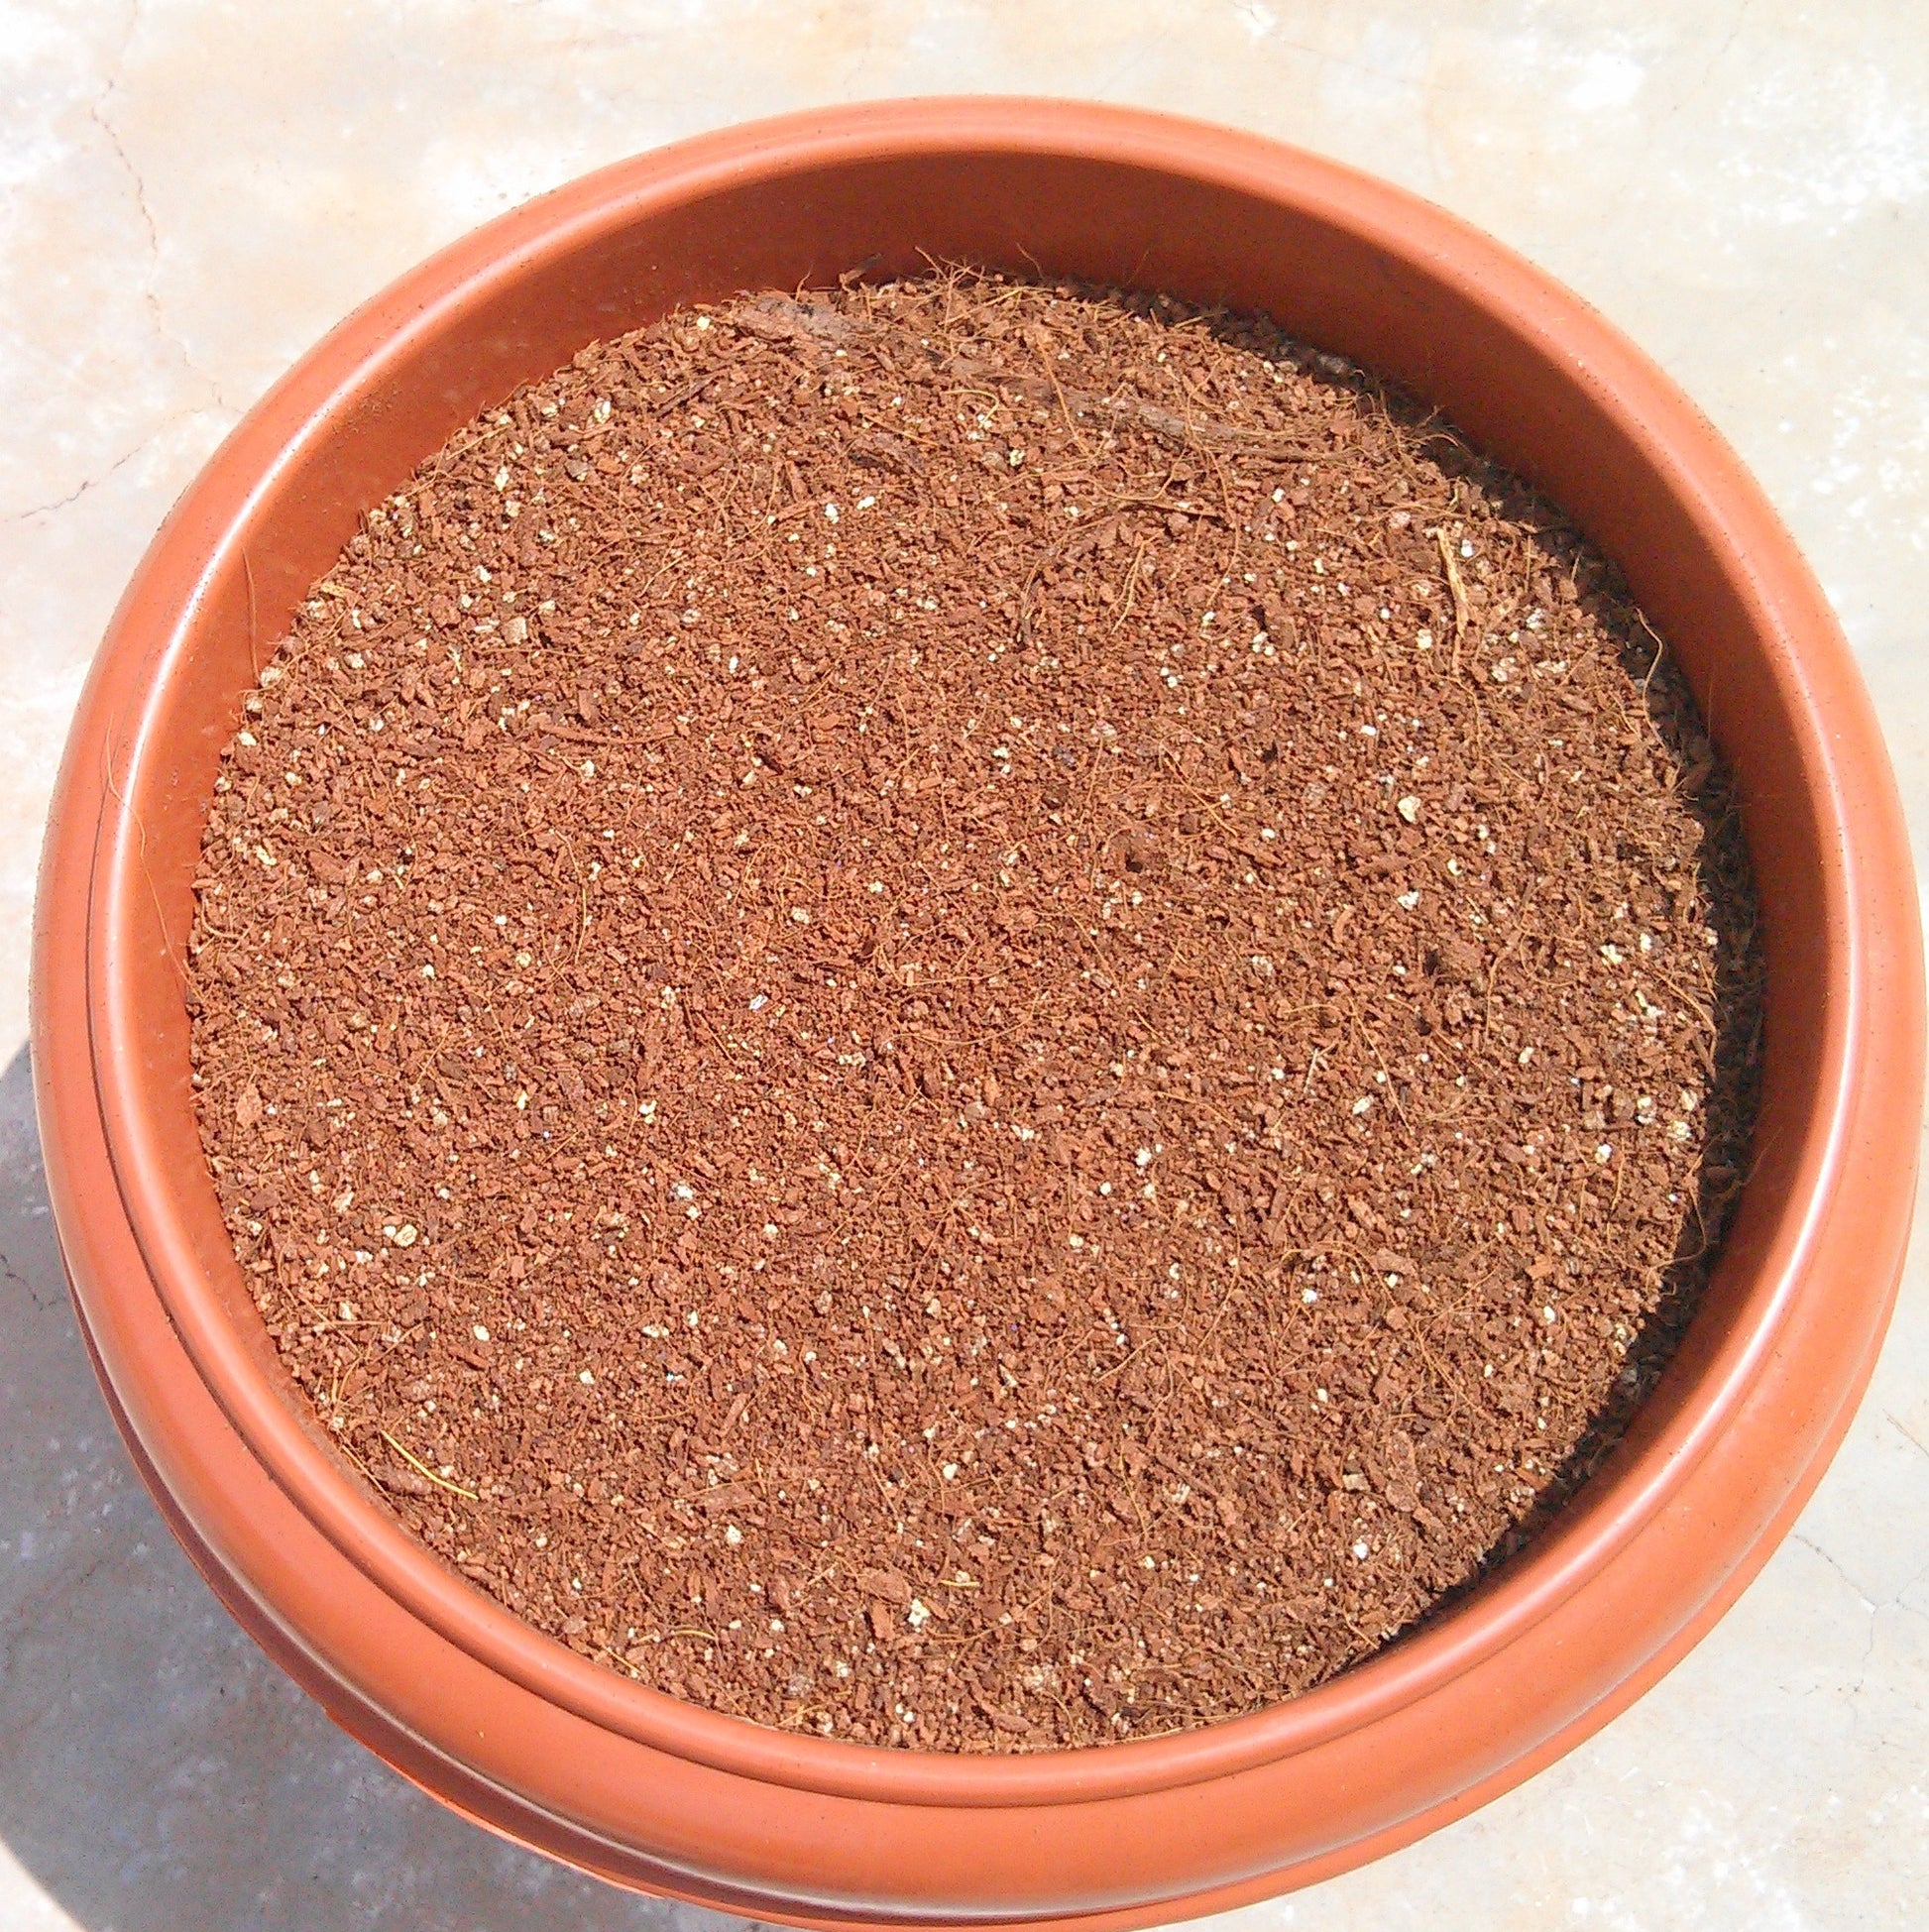 All Purpose Premium Potting Mix®- With Cocopeat & Organic Fertilizer-MahaGro- 10kg (Pack of 10 bags) - MahaGro™